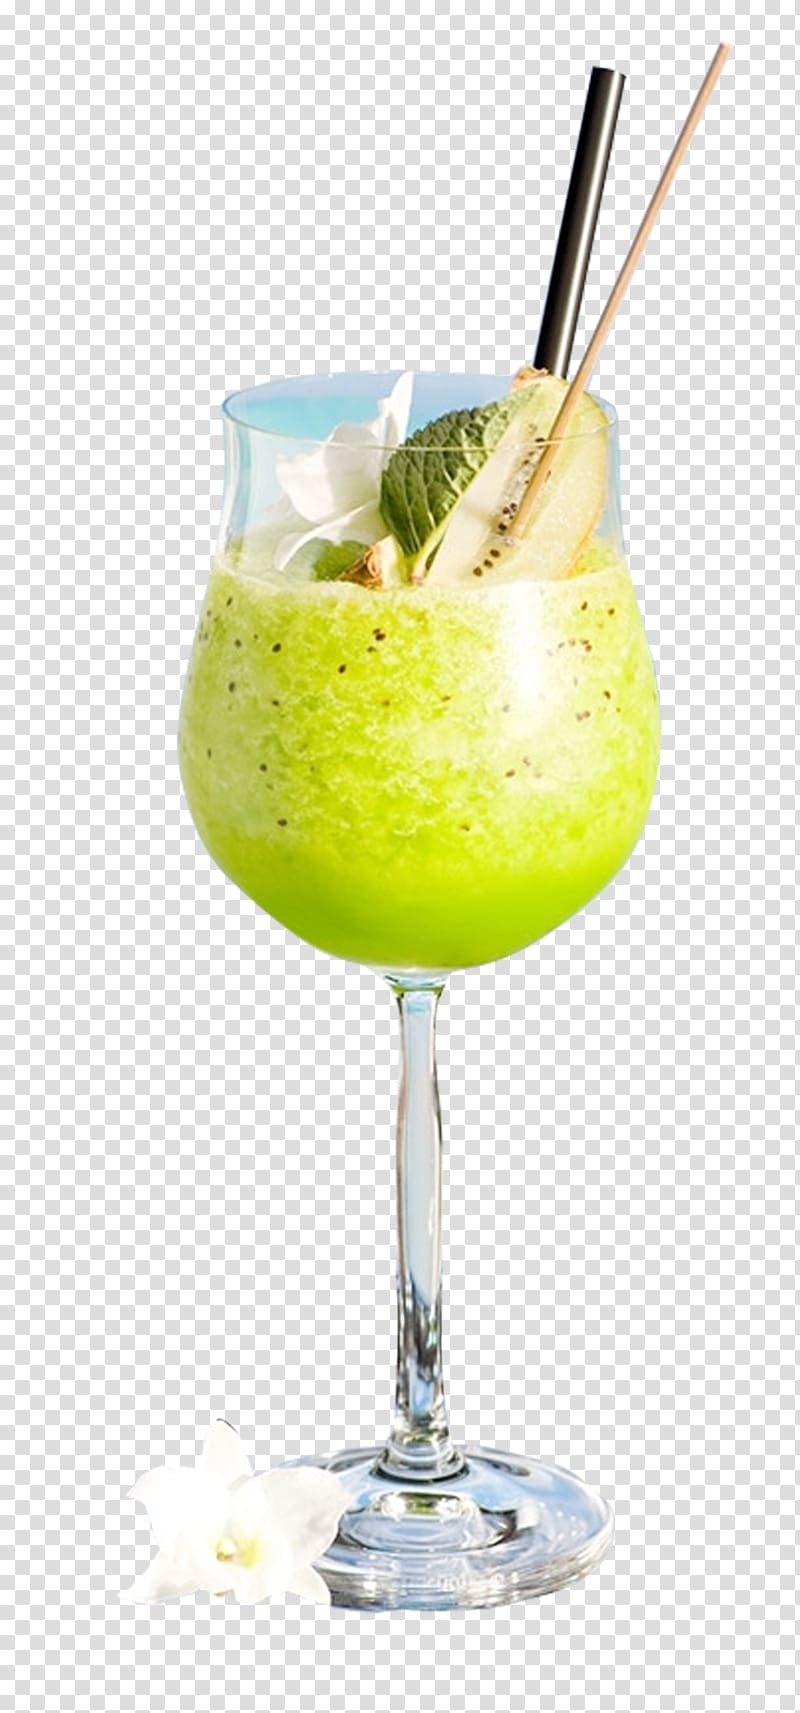 Smoothie Orange juice Milkshake Margarita, Guava juice transparent background PNG clipart